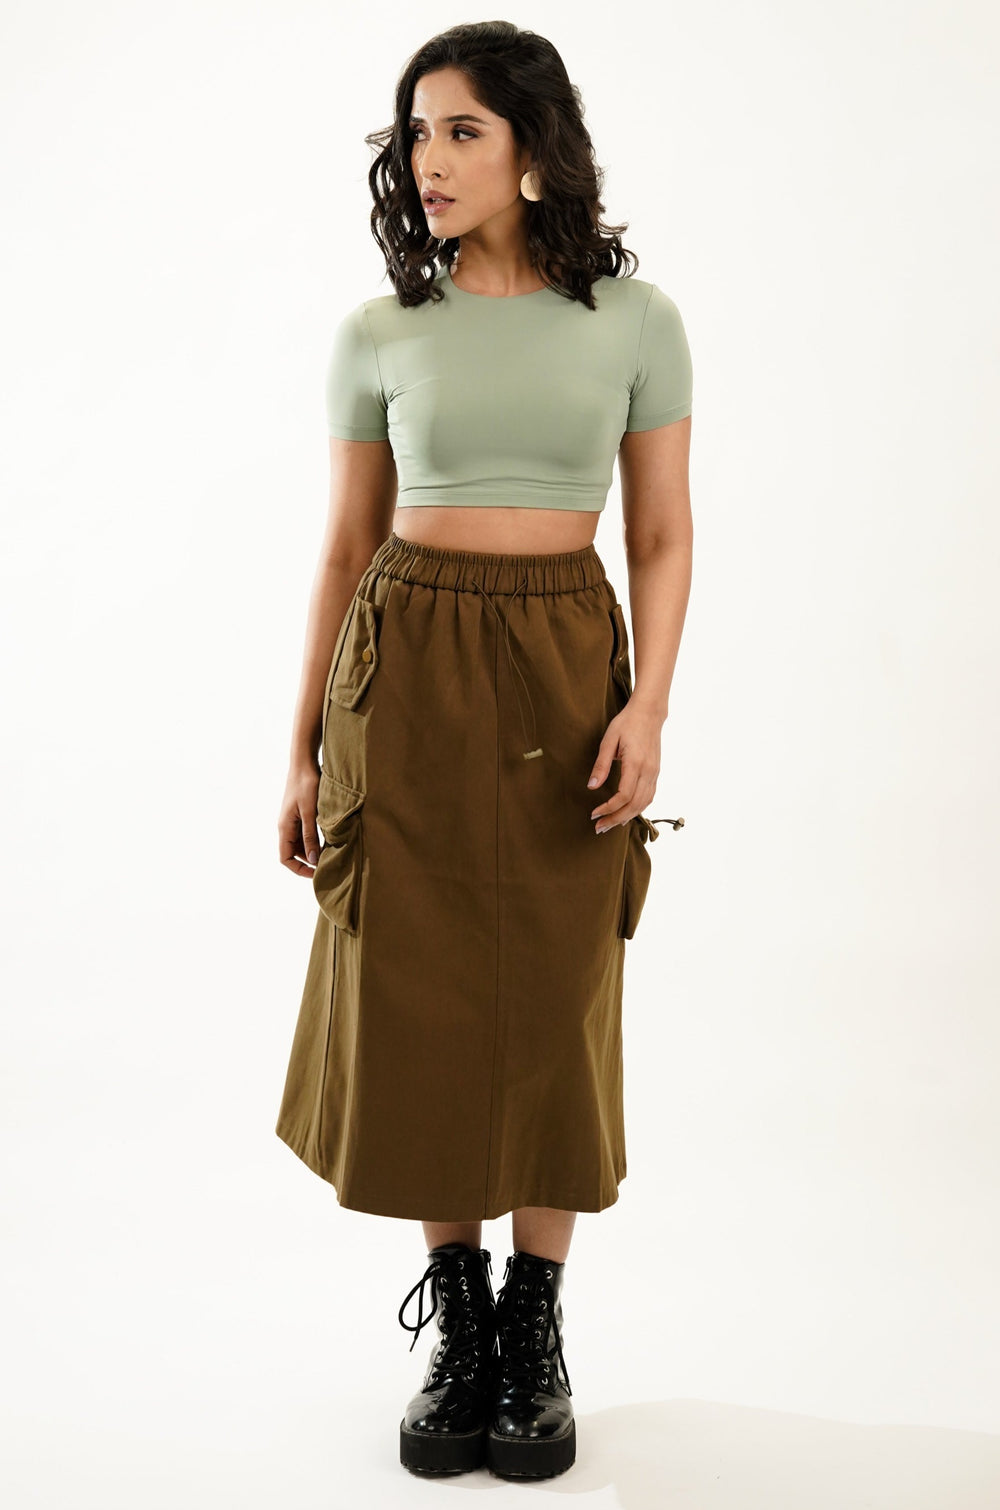 Stylish women's streetstyle cargo skirt in army green